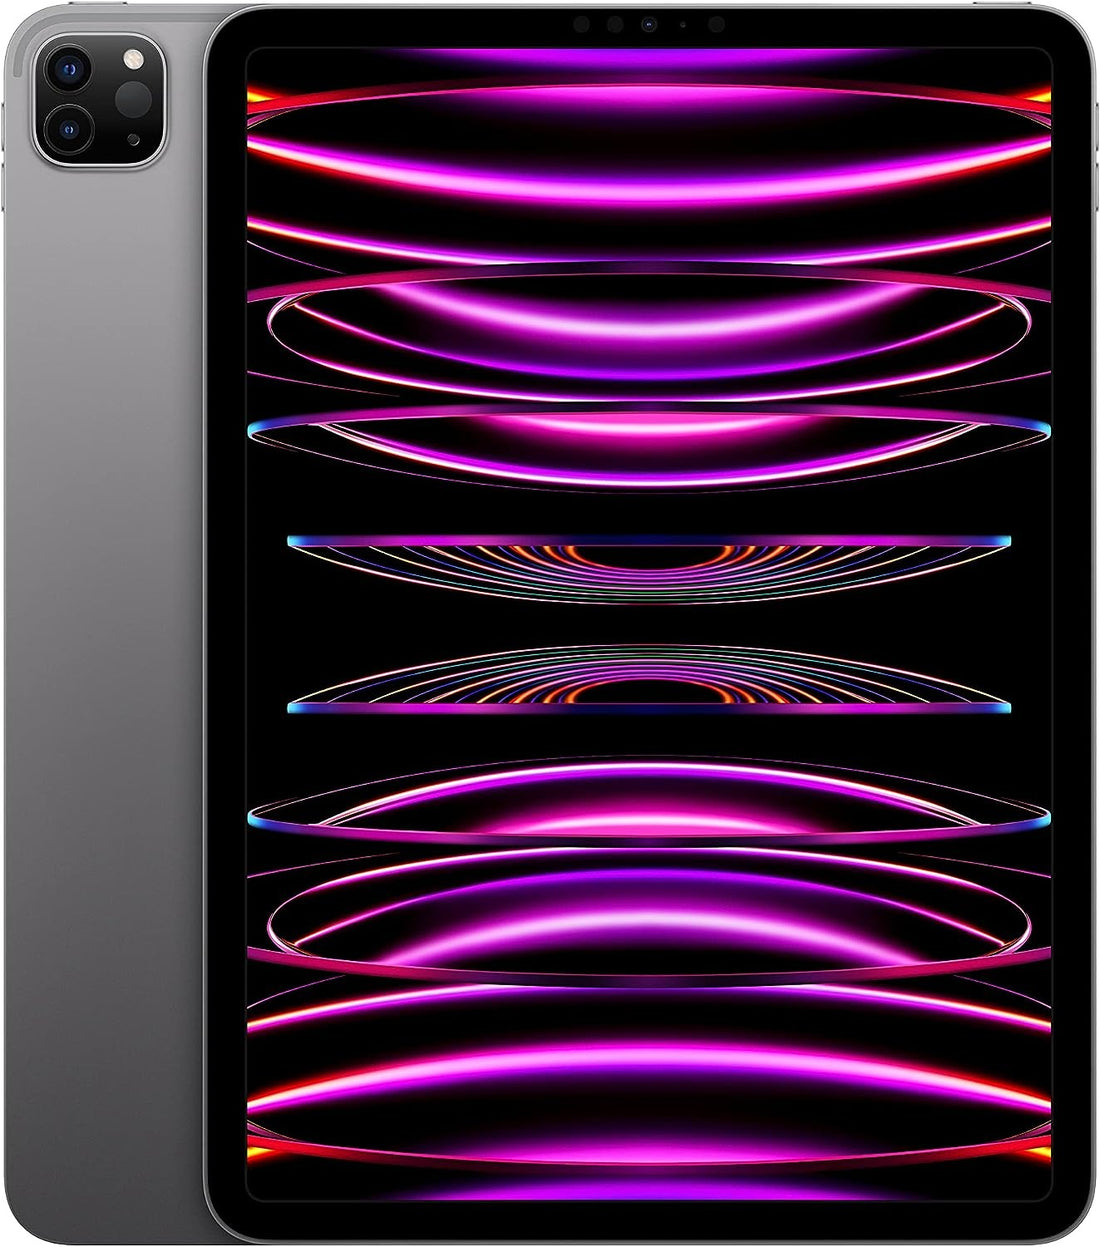 Apple iPad Pro 2020, 11-inch 2nd Gen, 128GB Wifi + Cellular (Unlocked) - Space Gray (Refurbished)